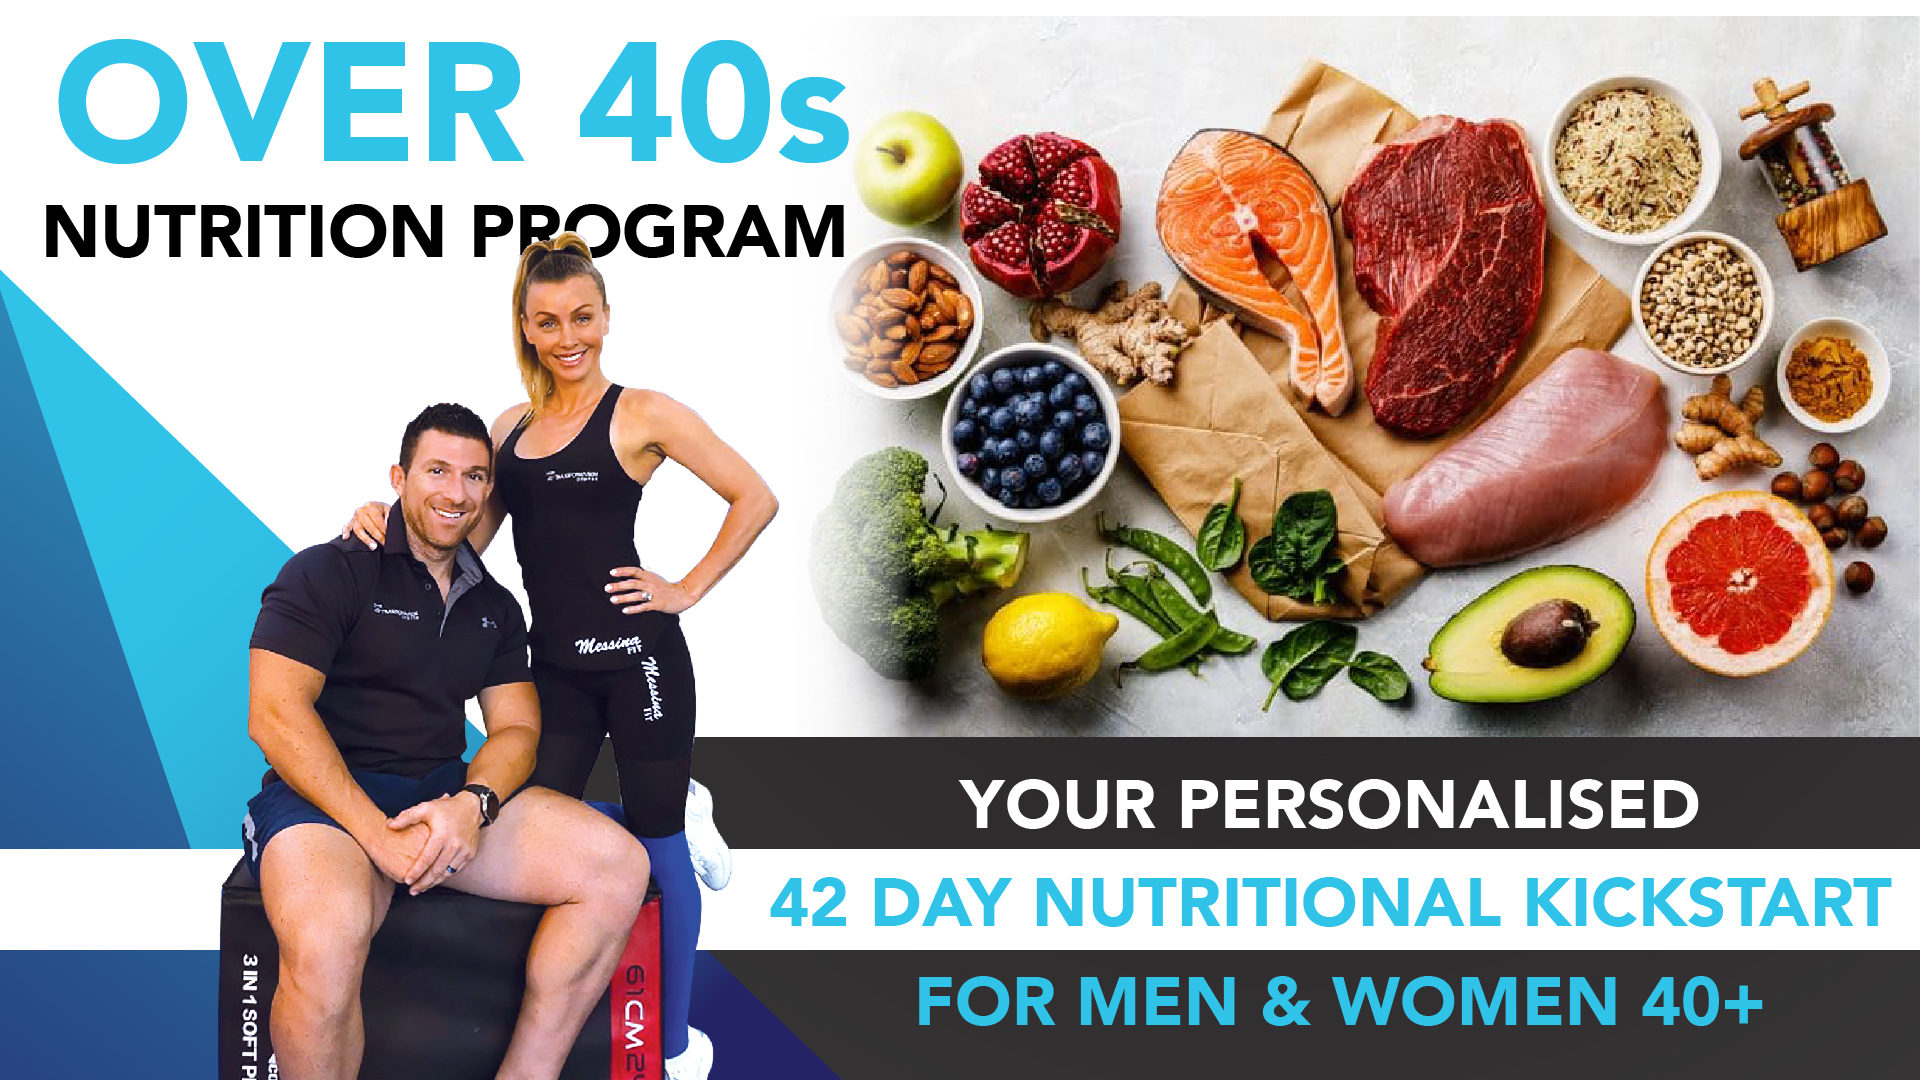 Over 40s Nutrition Program